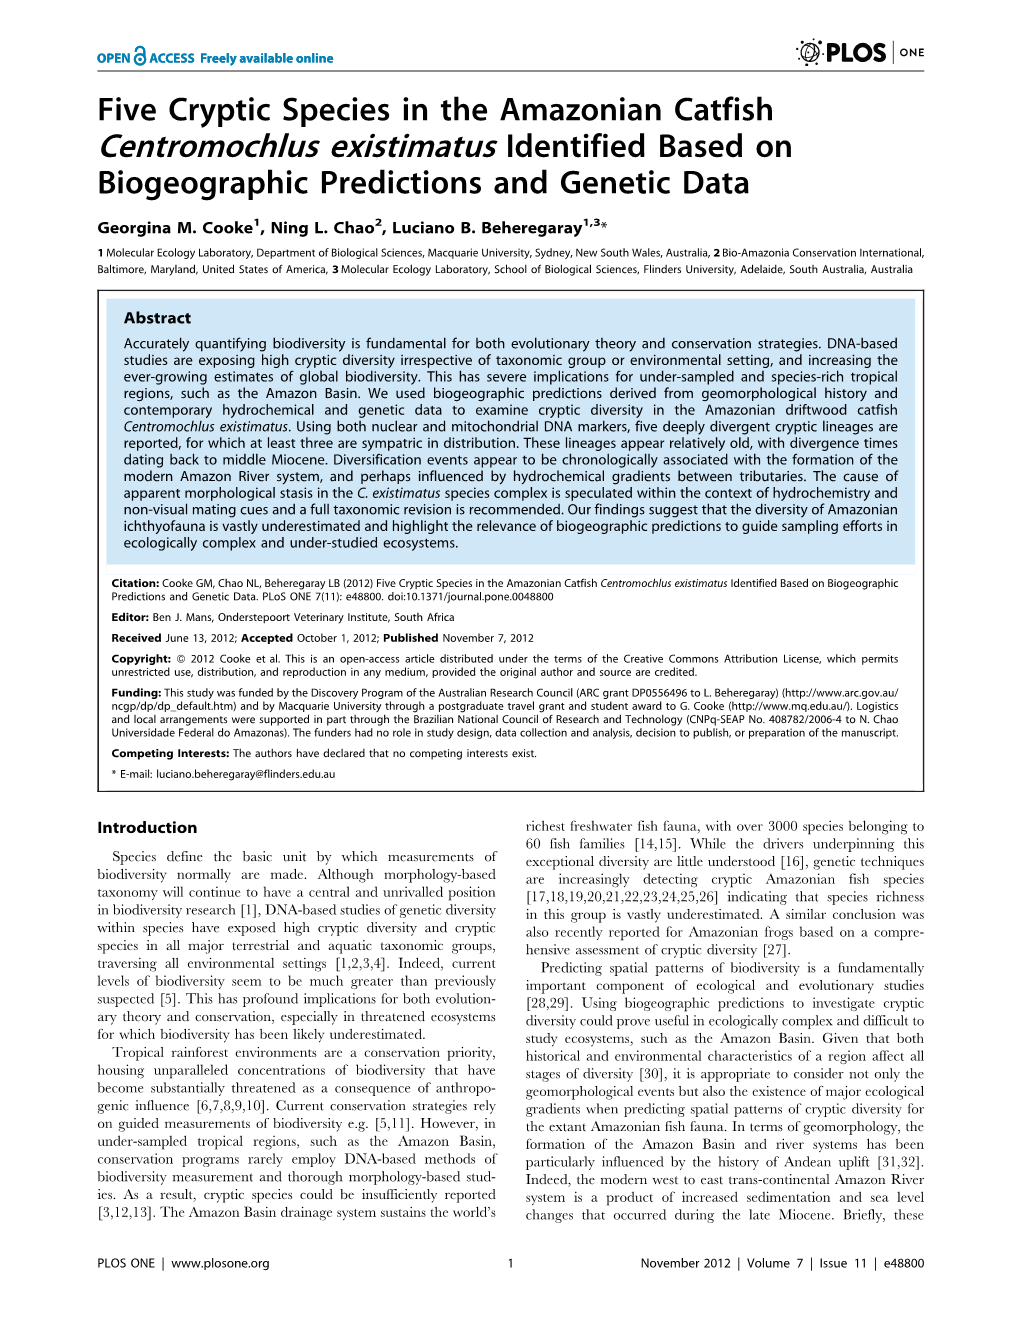 Centromochlus Existimatus Identified Based on Biogeographic Predictions and Genetic Data